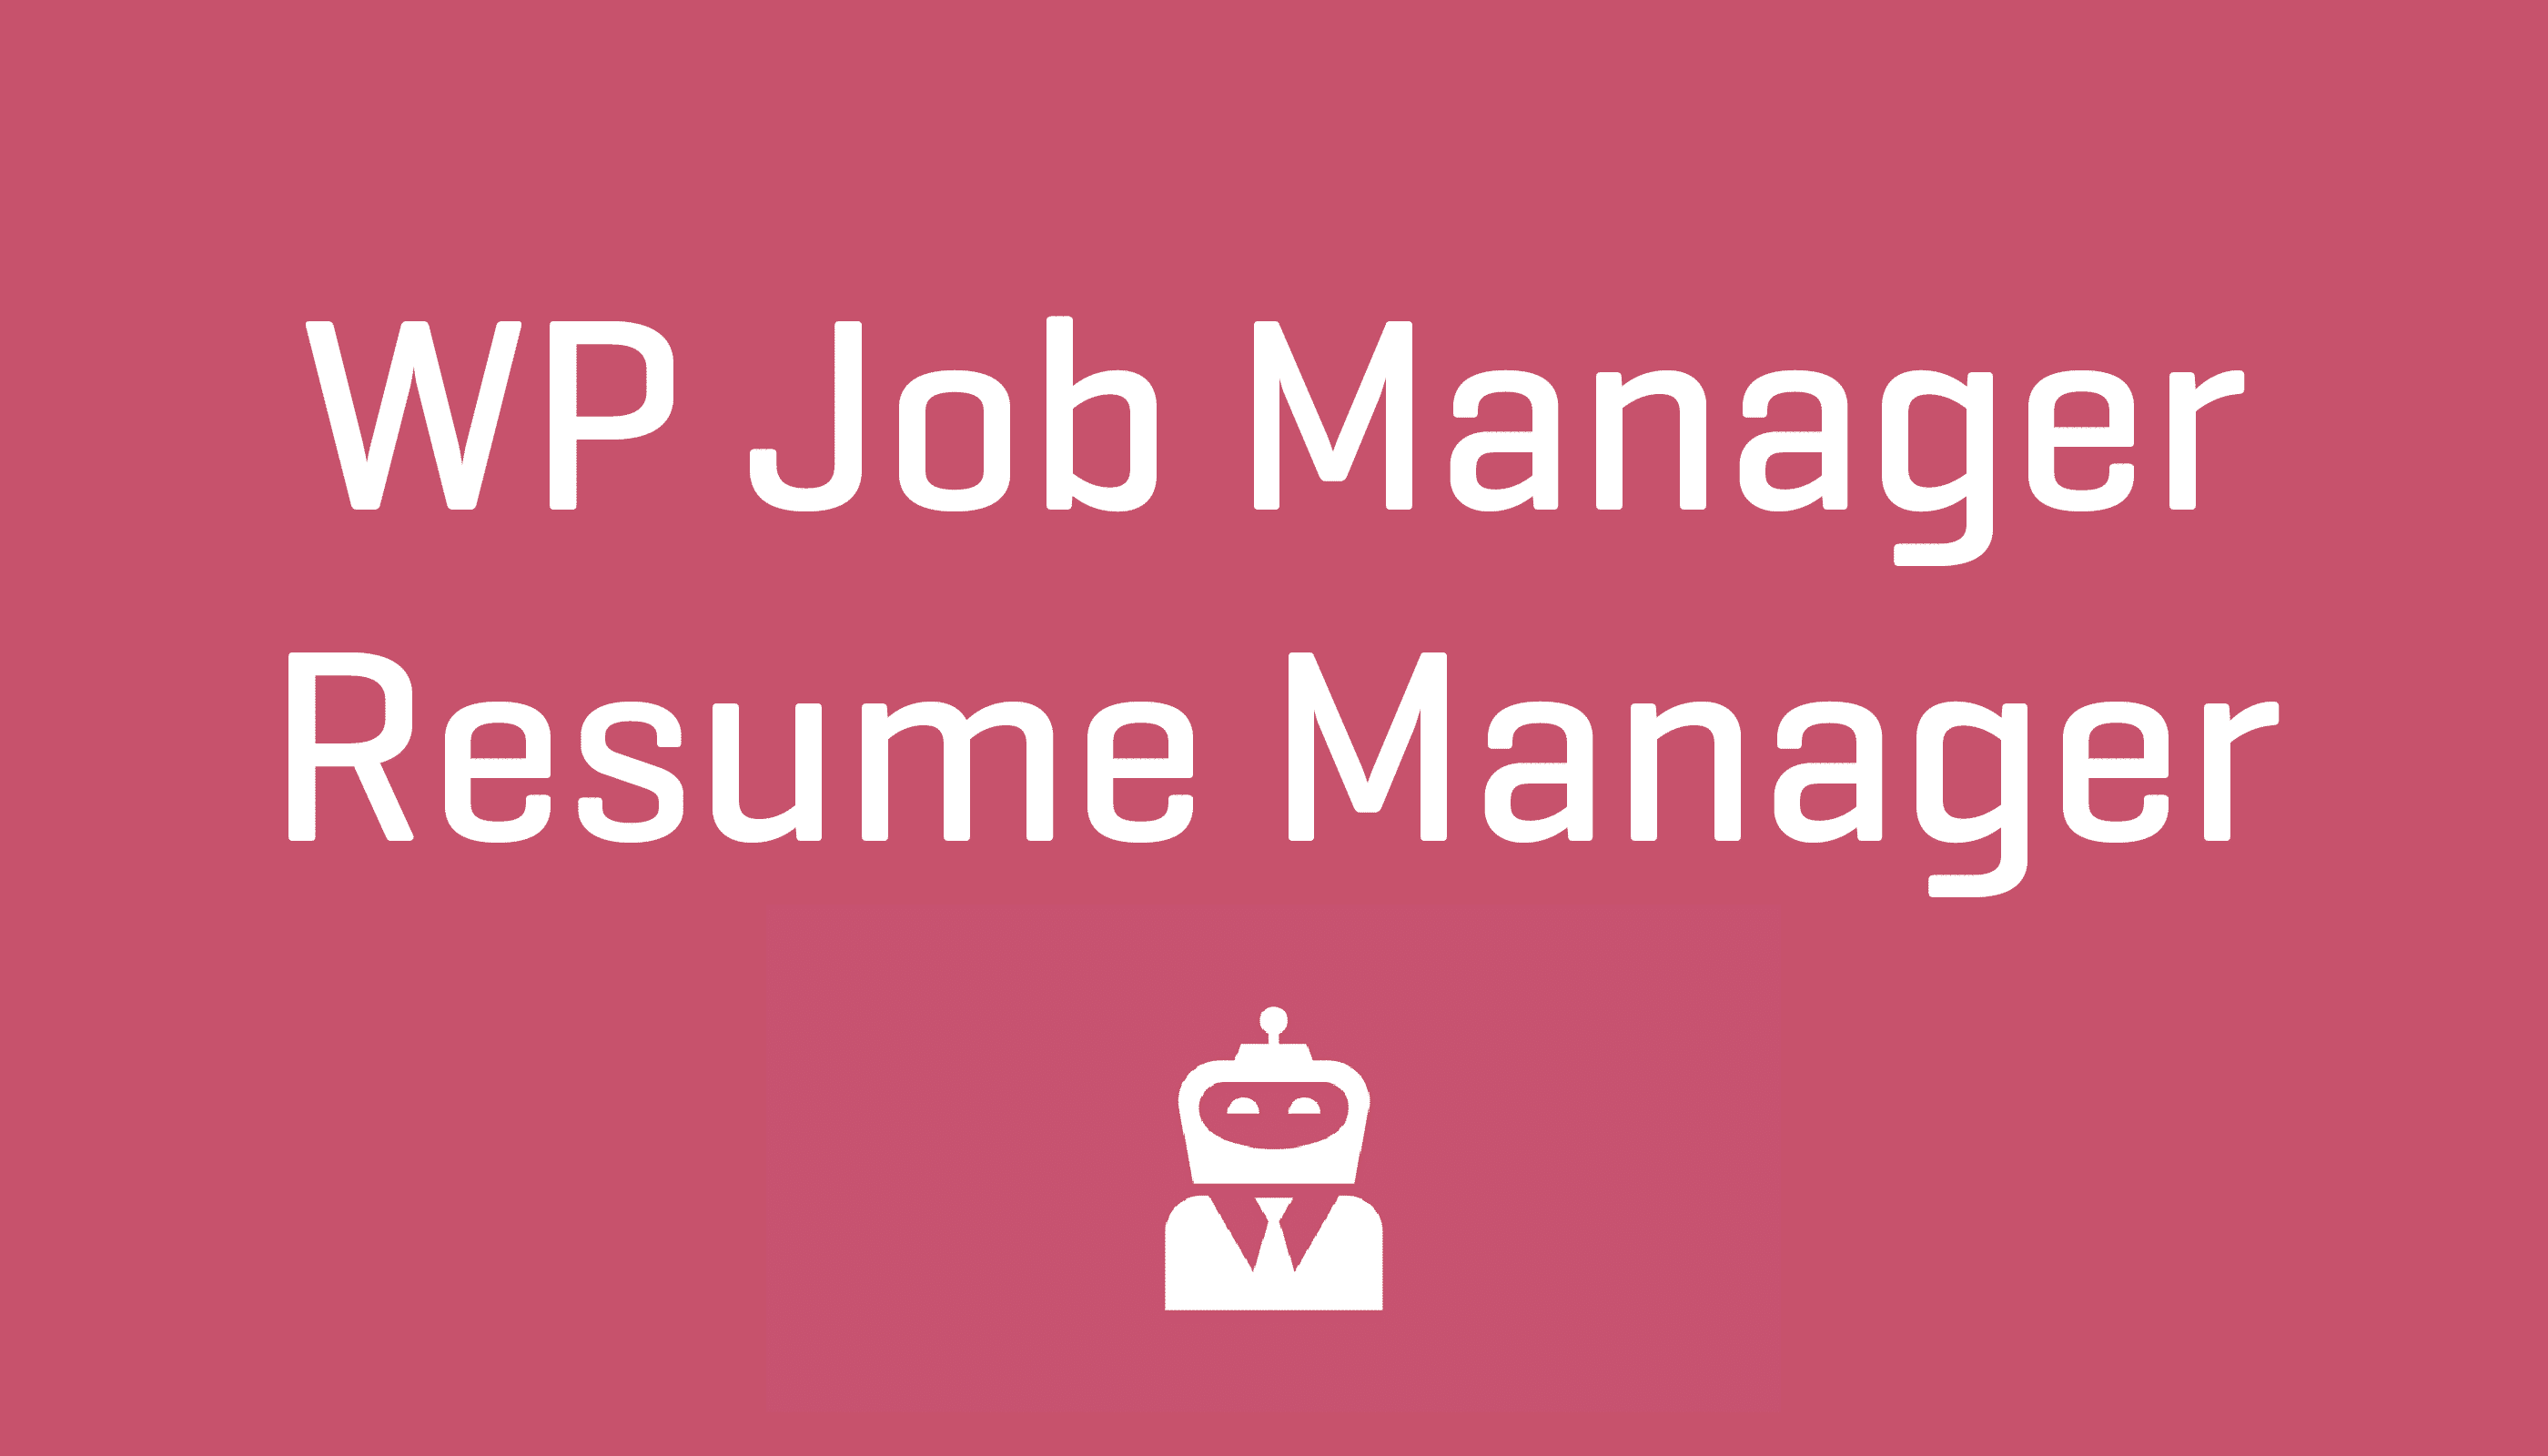 WP Job Manager Resume Manager Addon